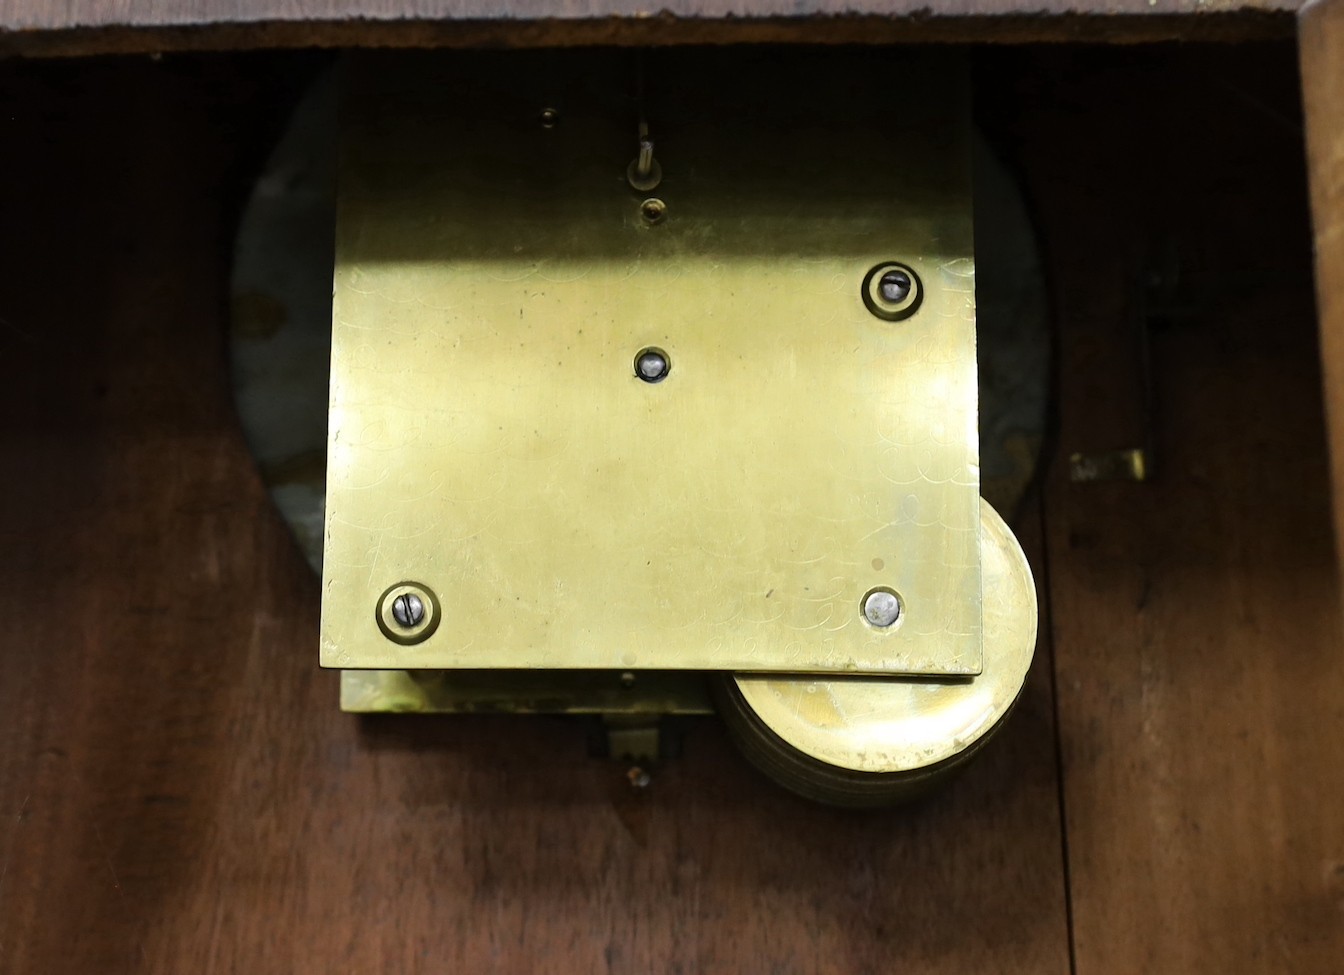 A Victorian mahogany bracket timepiece, single fusee movement, 42cm high